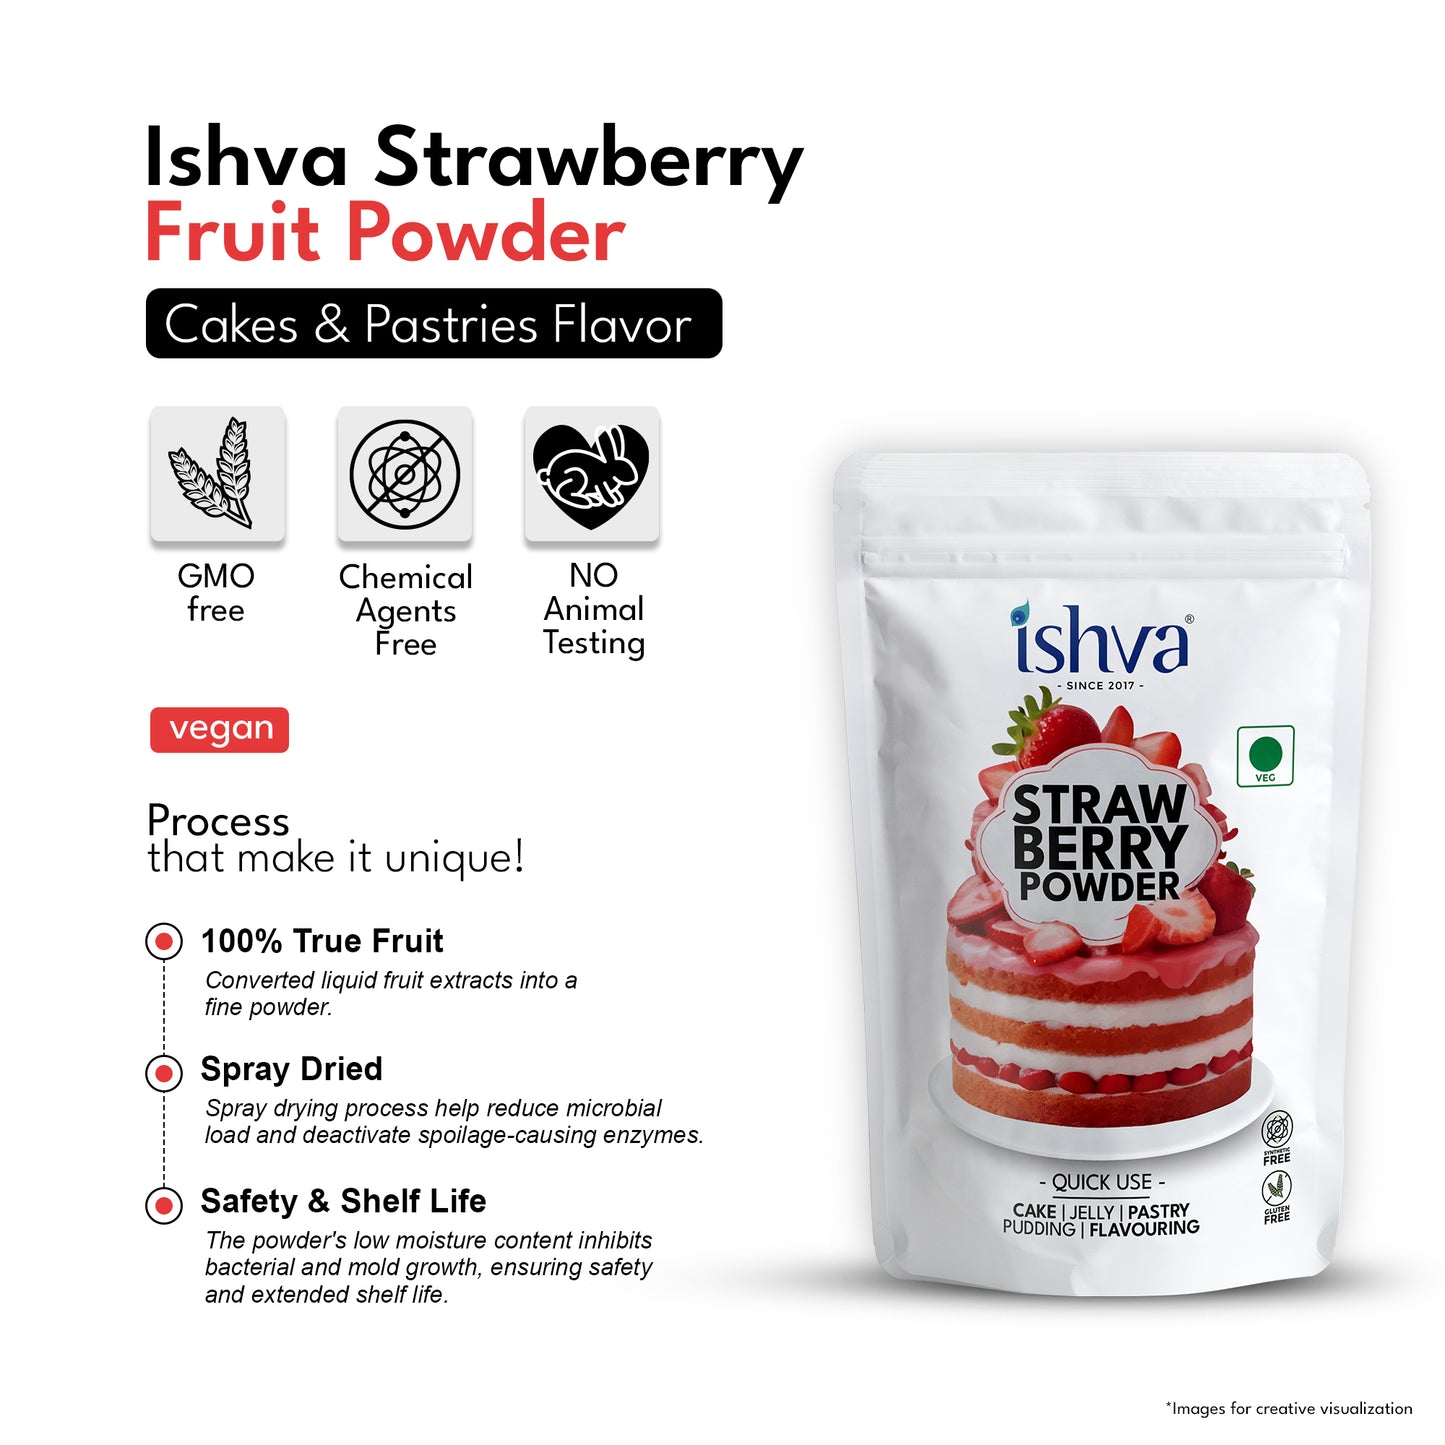 Ishva Strawberry Powder - Cakes Flavor